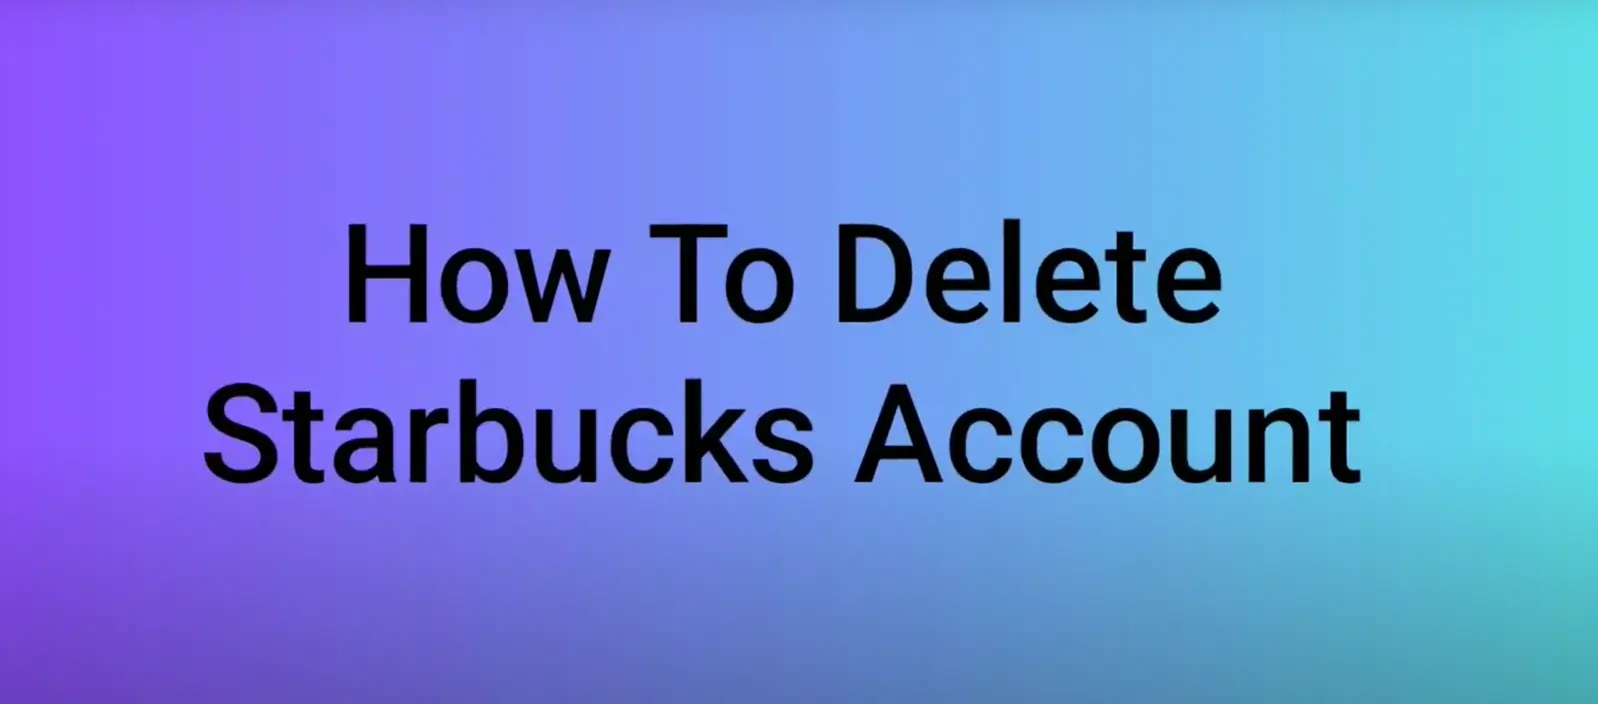 How to Delete Starbucks Account Permanently